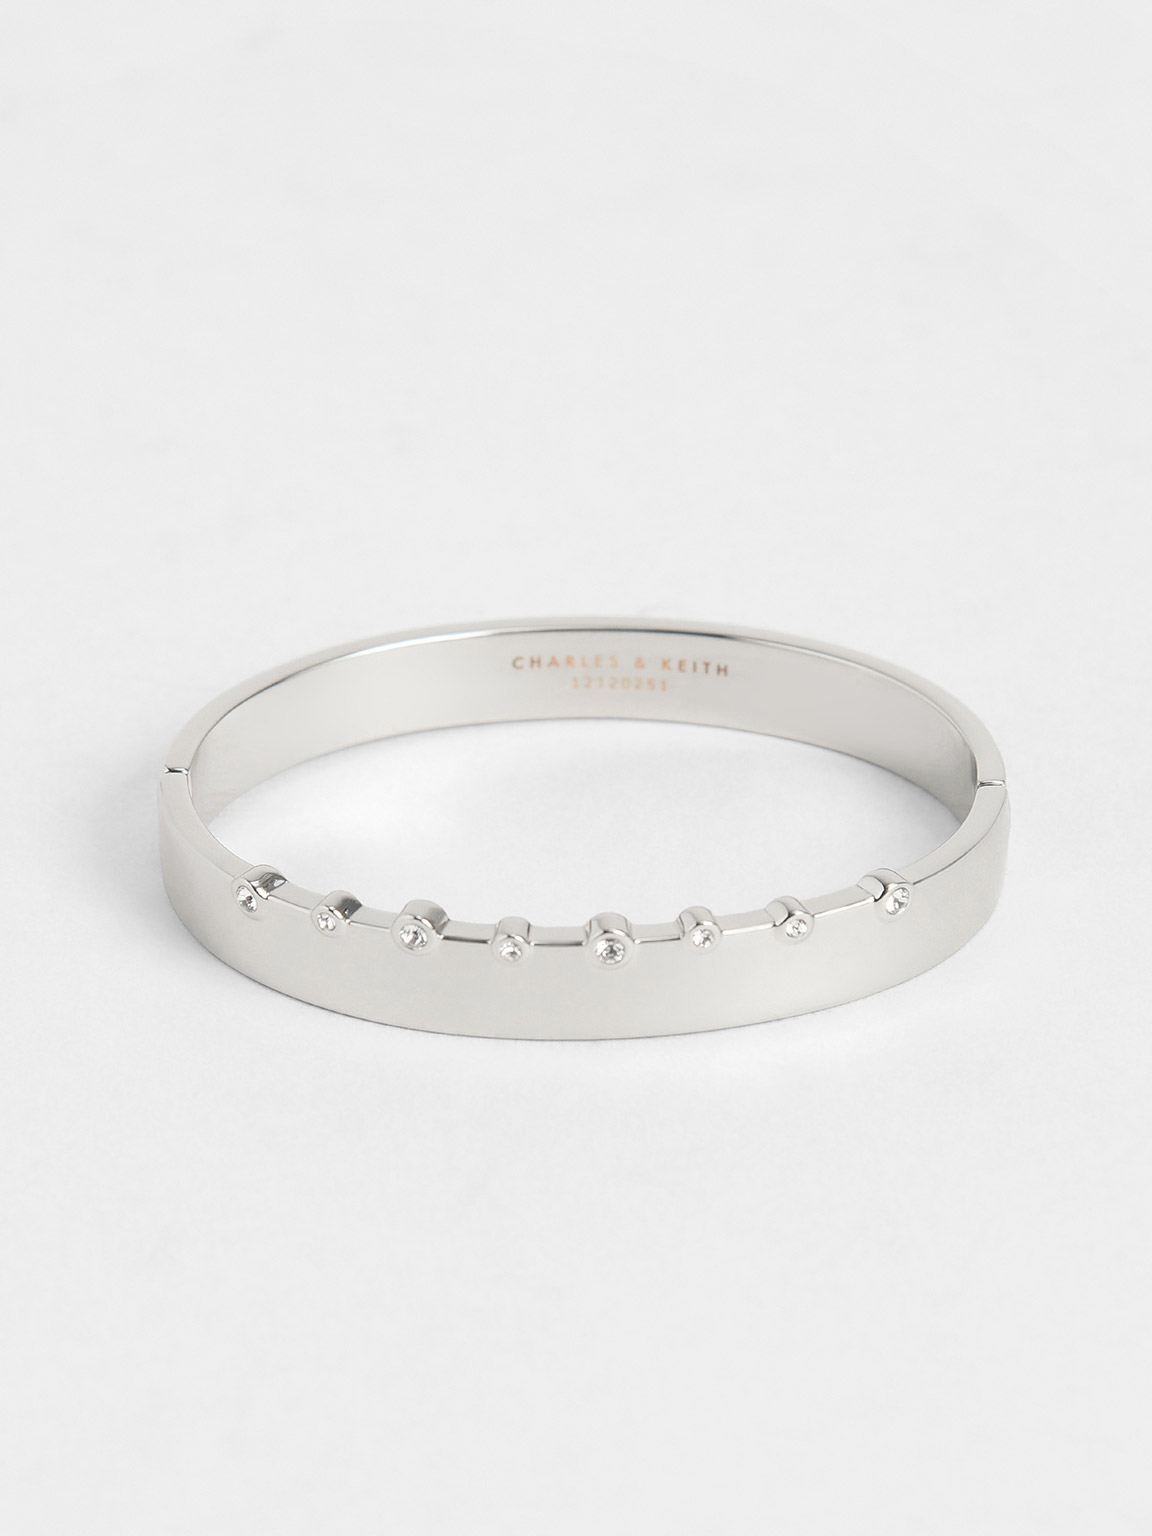 Swarovski(r) Crystal Studded Bracelet